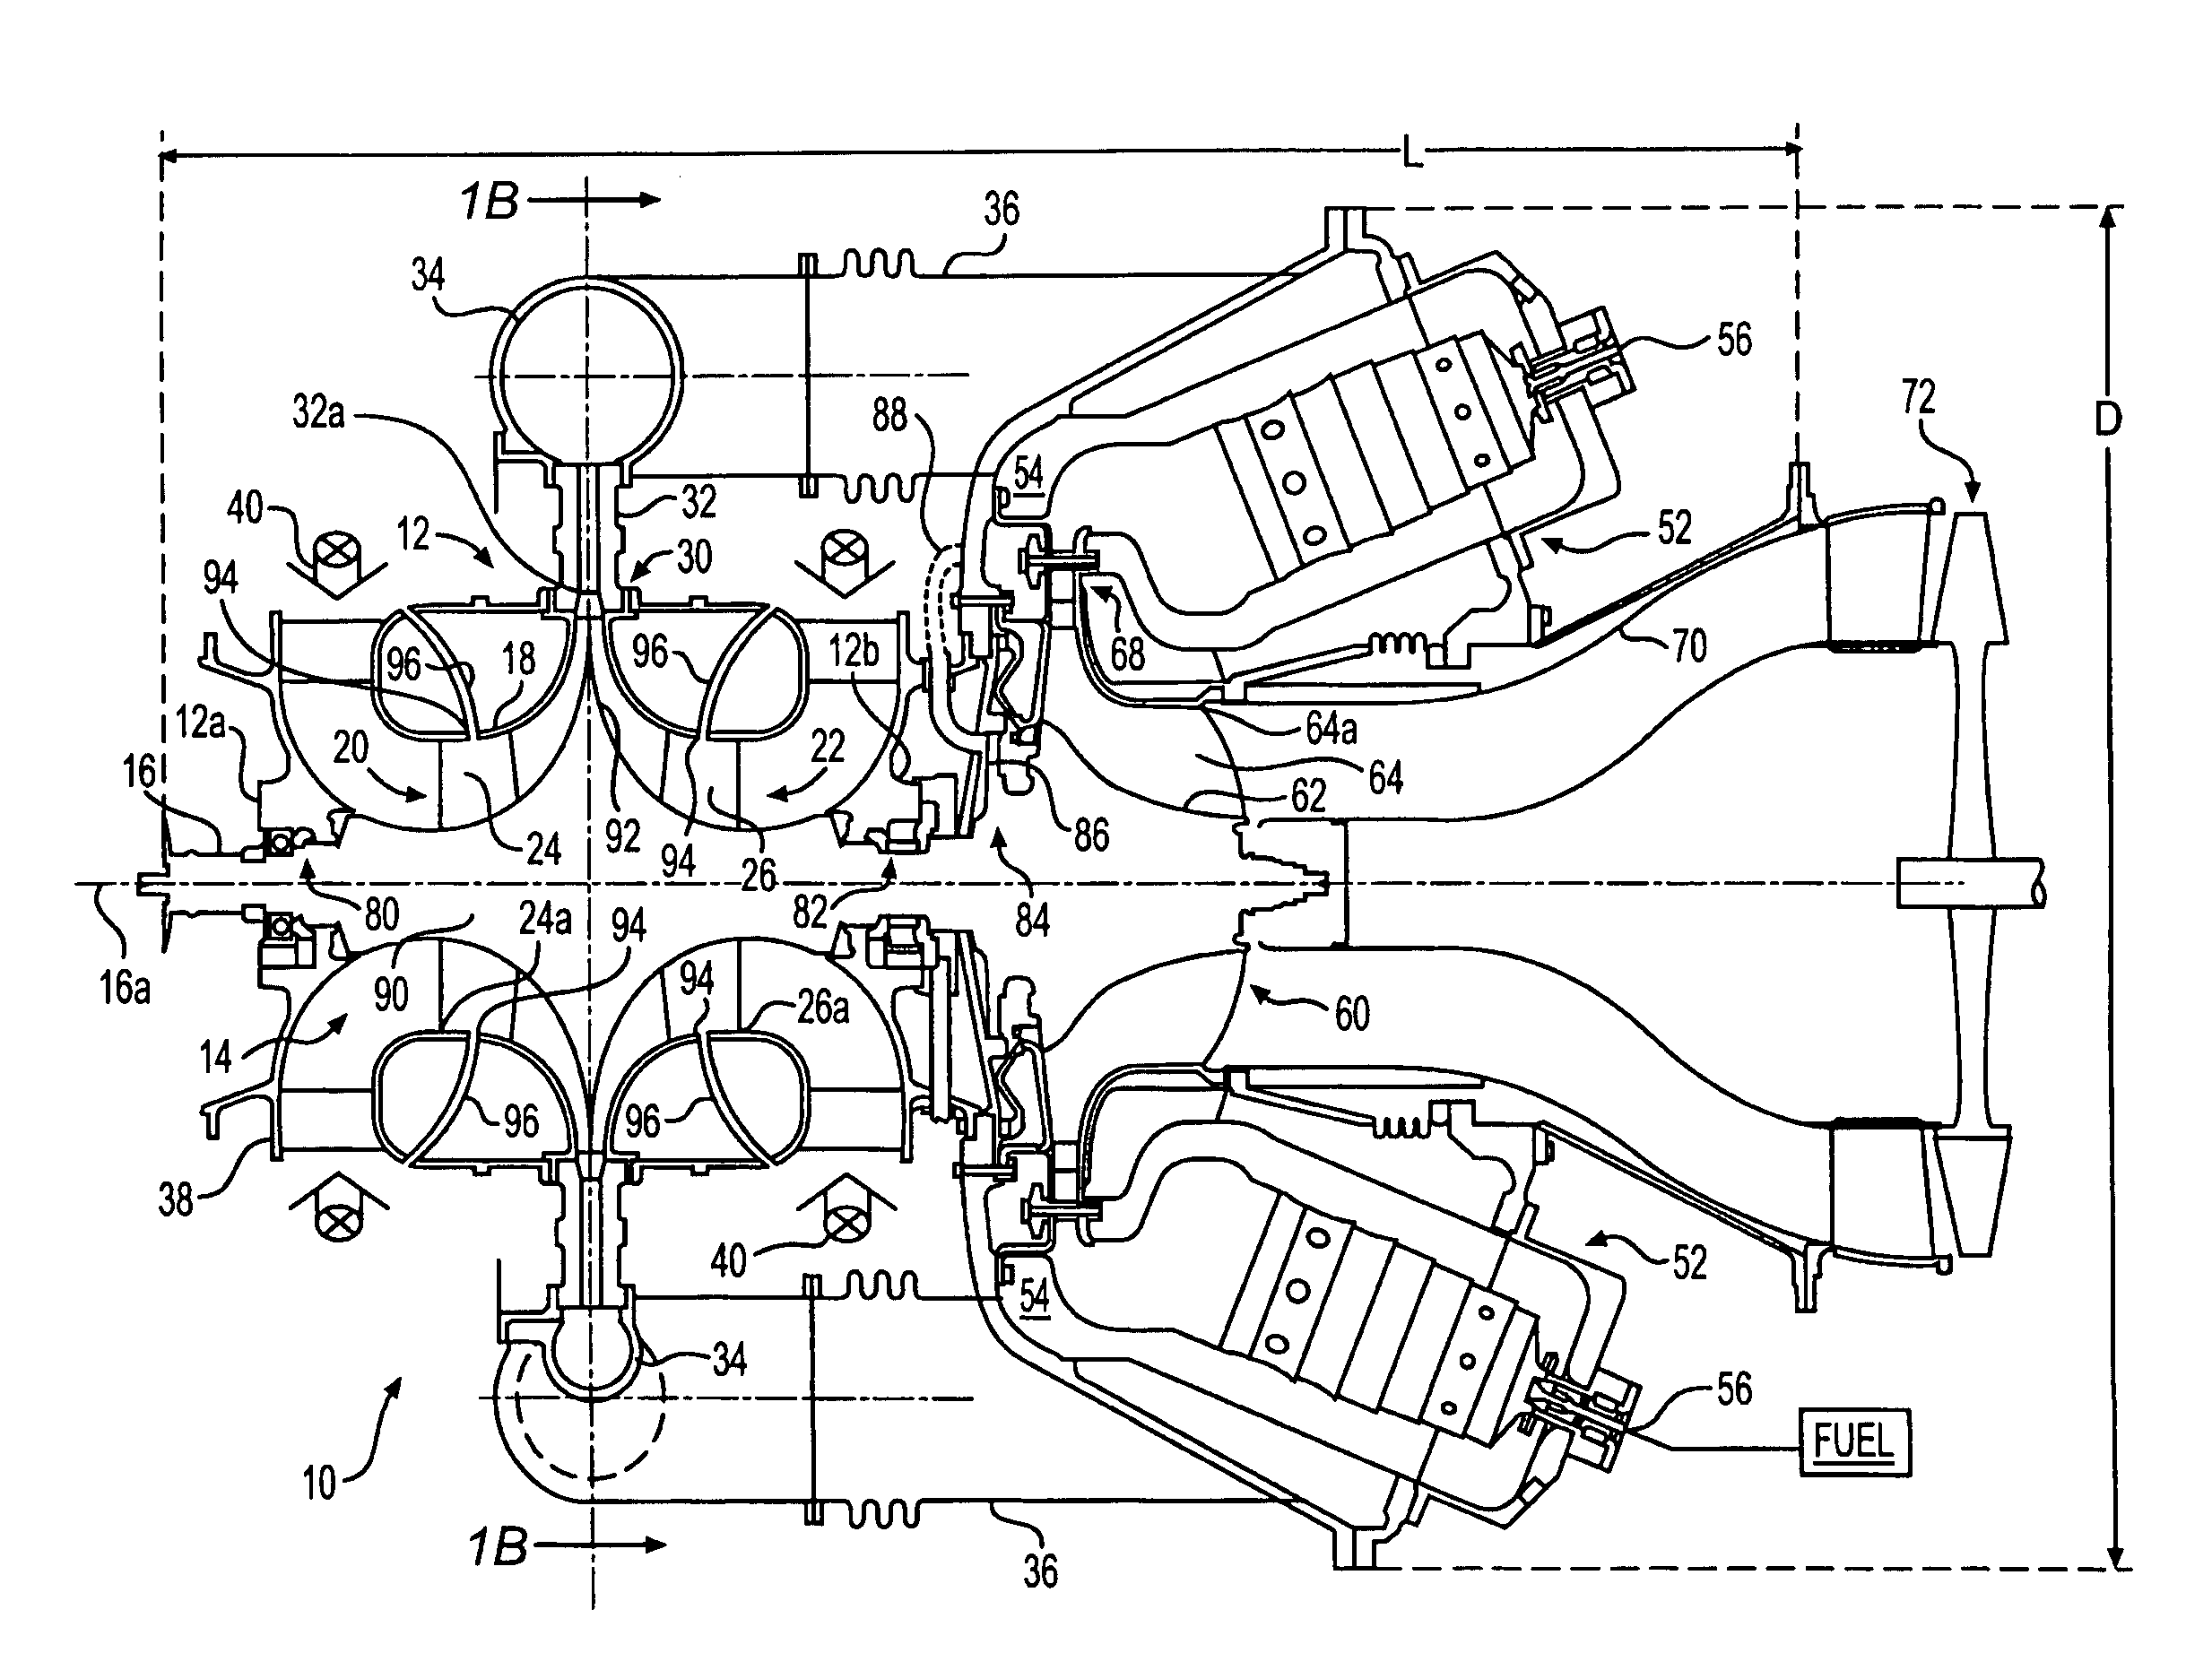 Single stage dual-entry centrifugal compressor, radial turbine gas generator